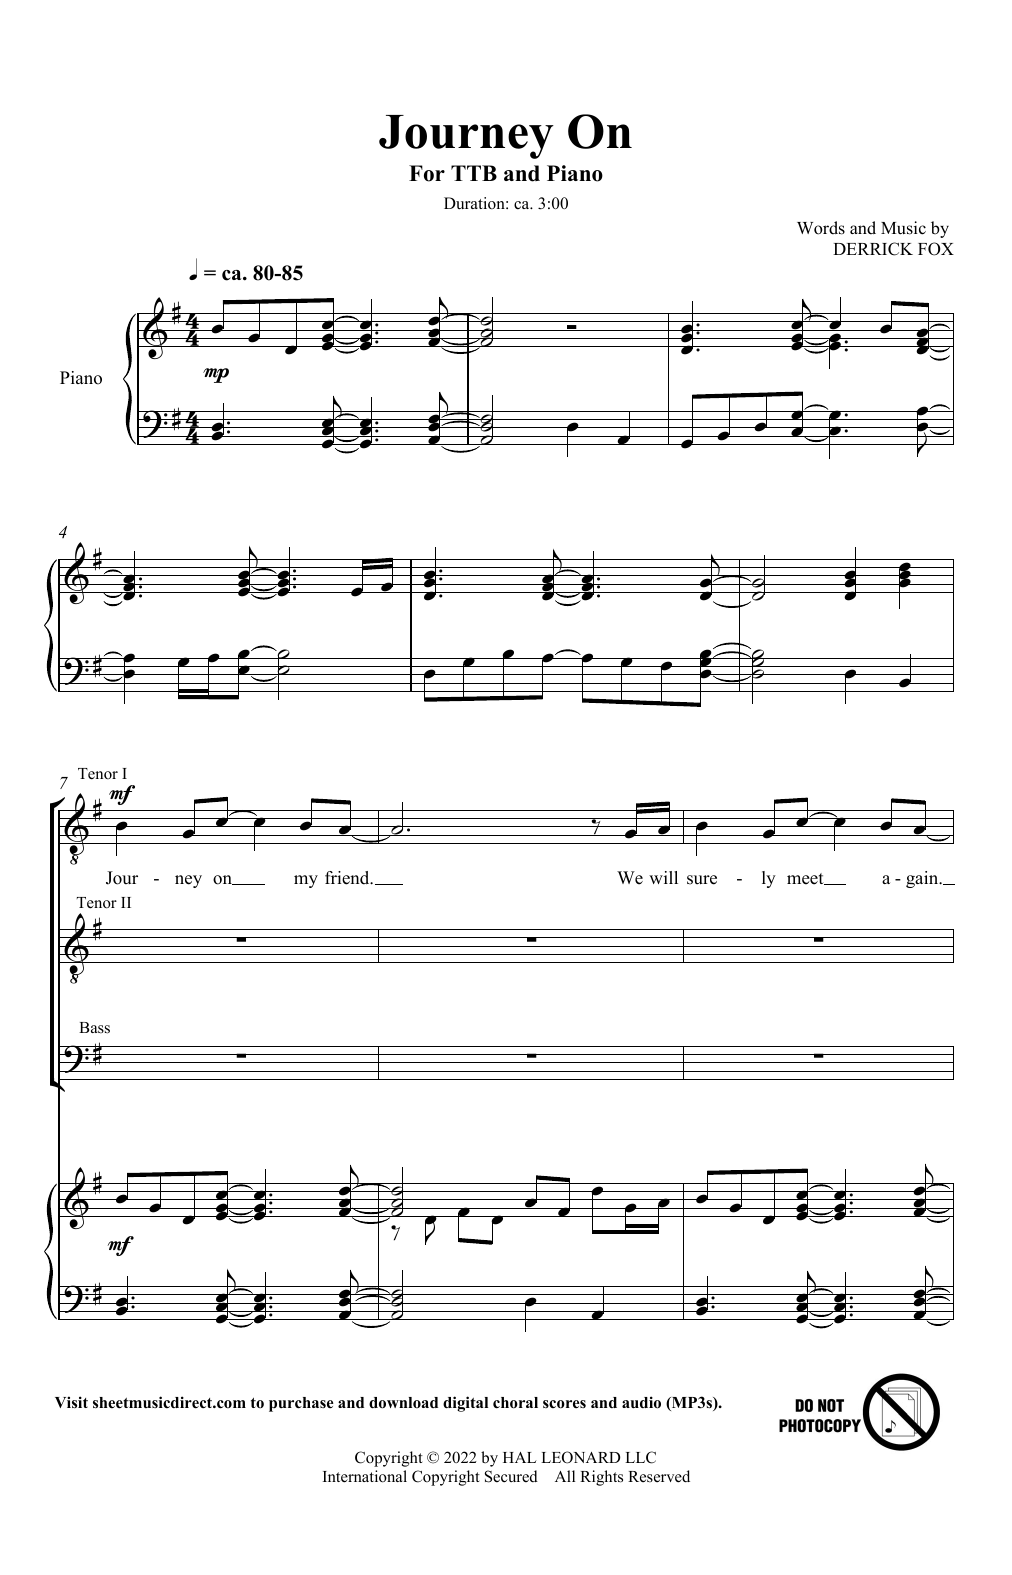 Derrick Fox Journey On Sheet Music Notes & Chords for TTBB Choir - Download or Print PDF